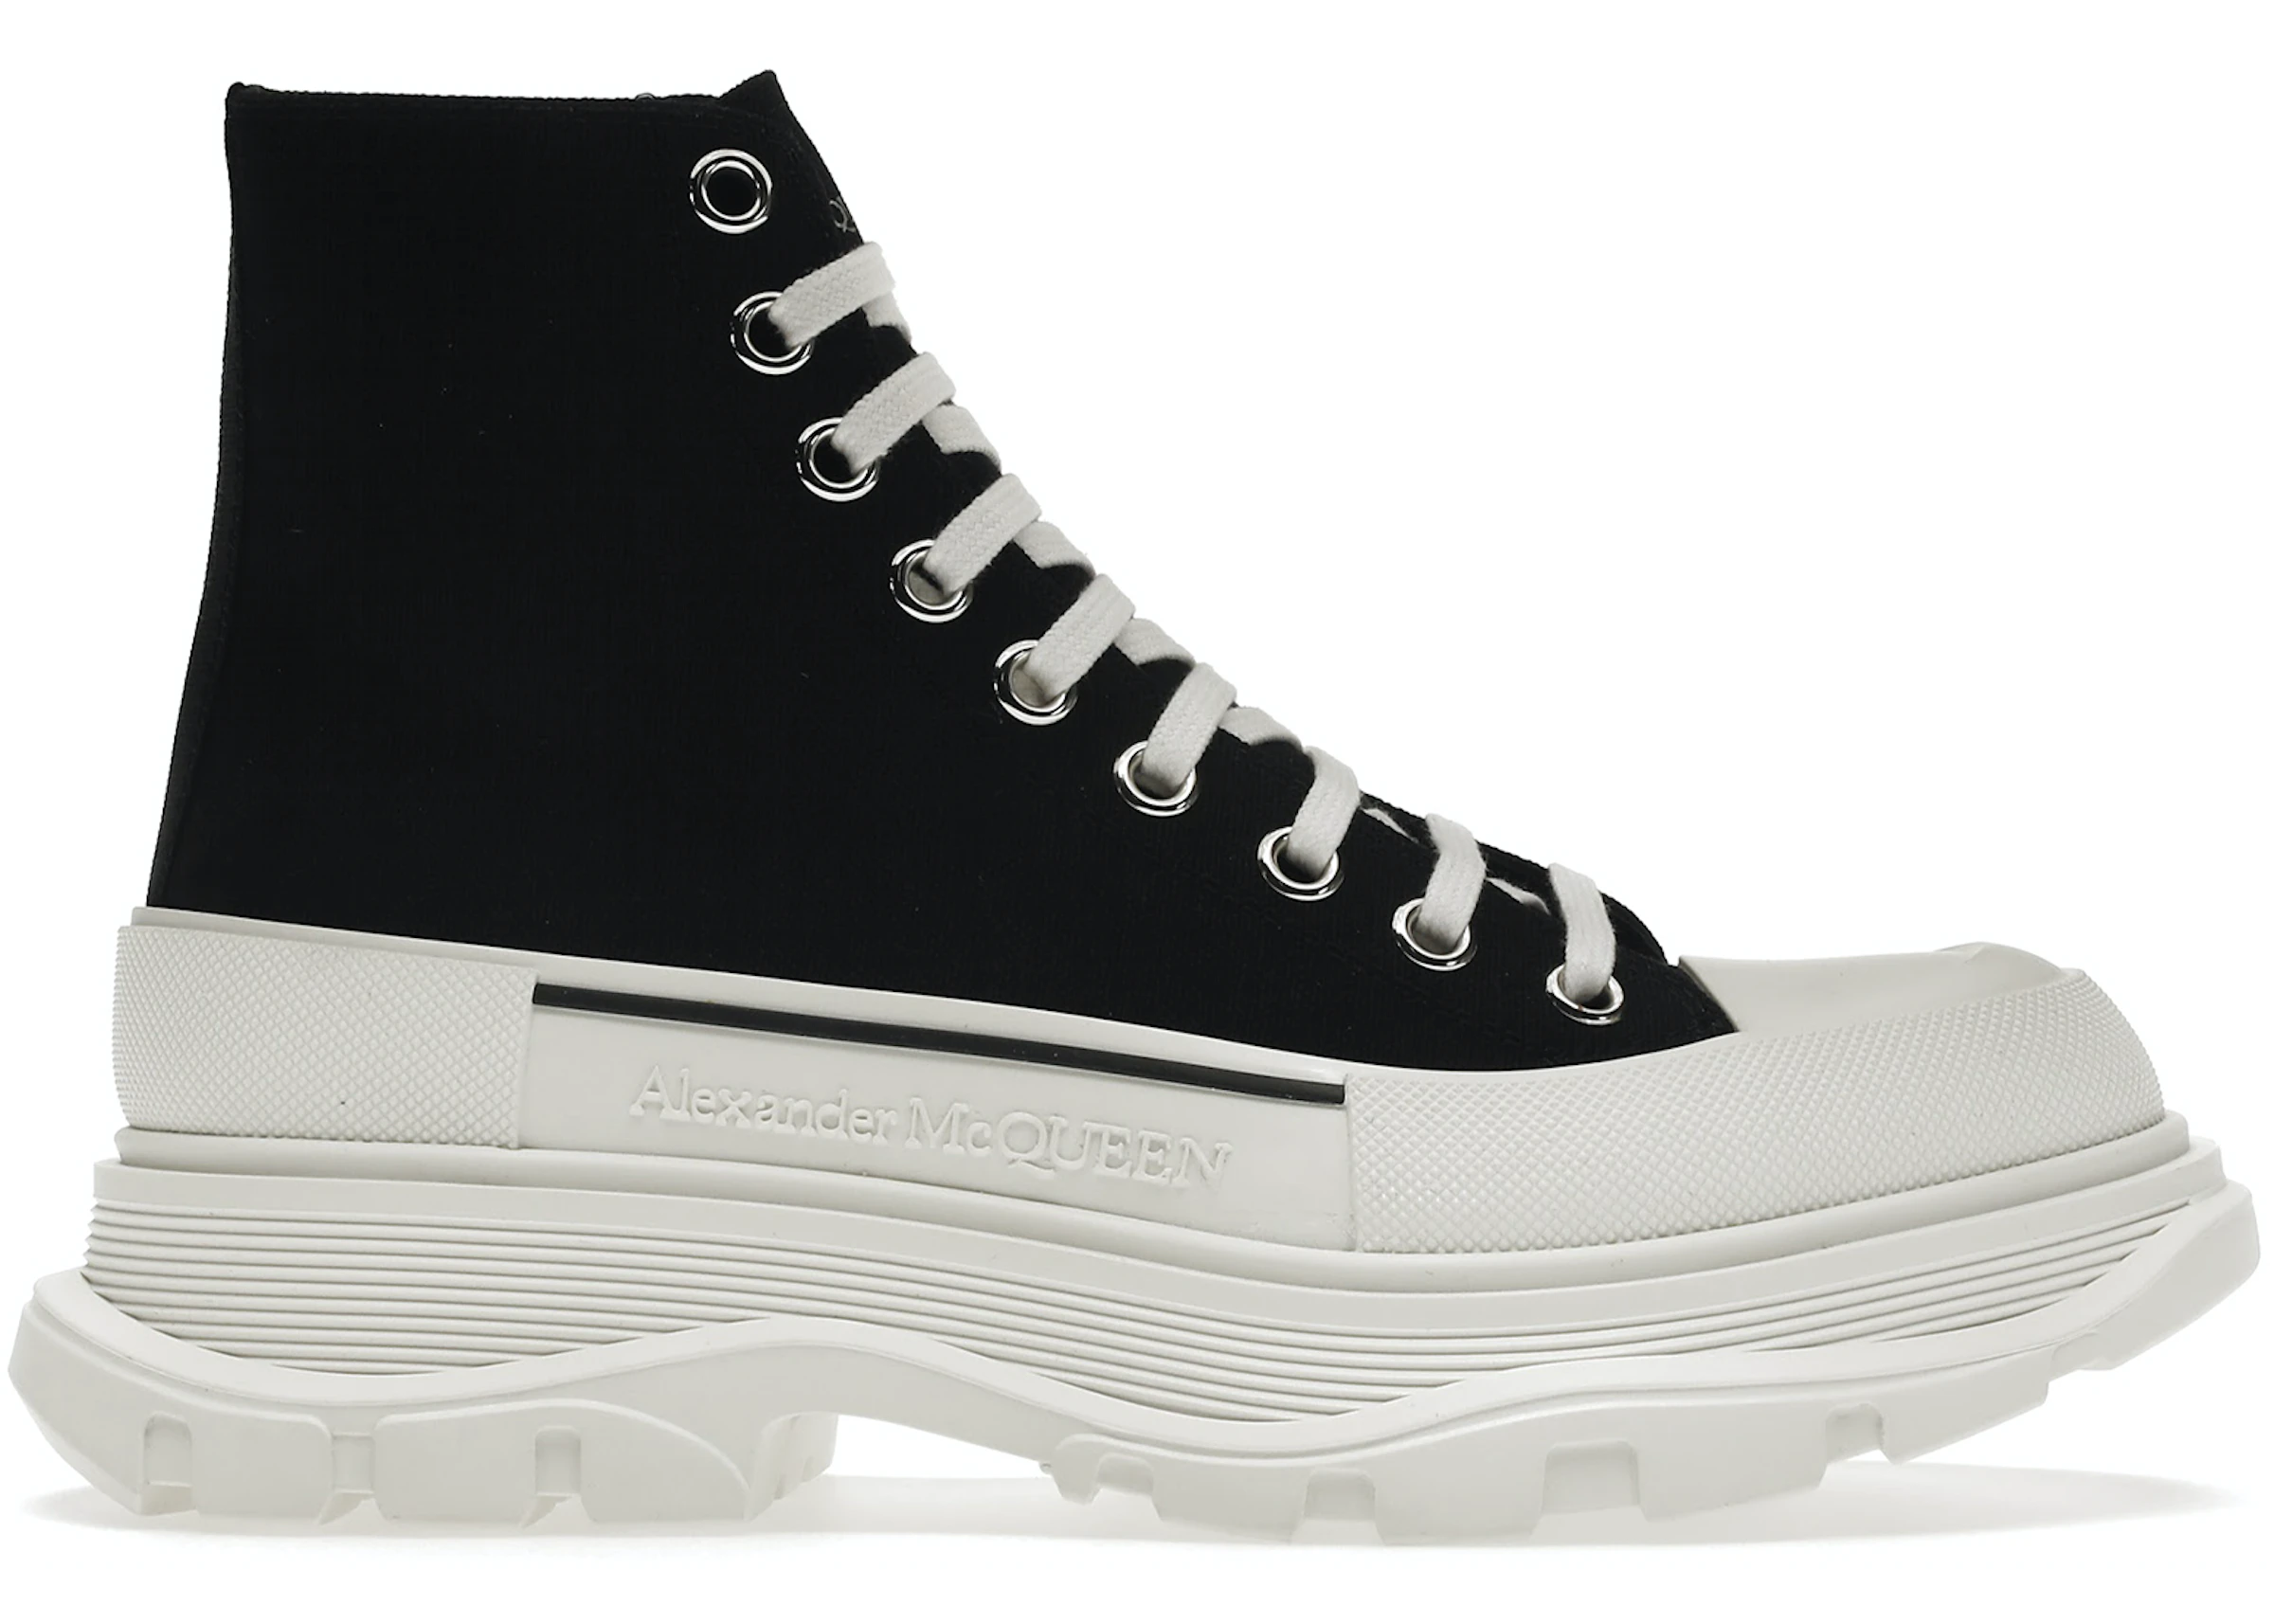 Alexander McQueen Tread Slick Lace Up Boot Black White - 604254W4MV21070 /  705659W4MV21070 - US